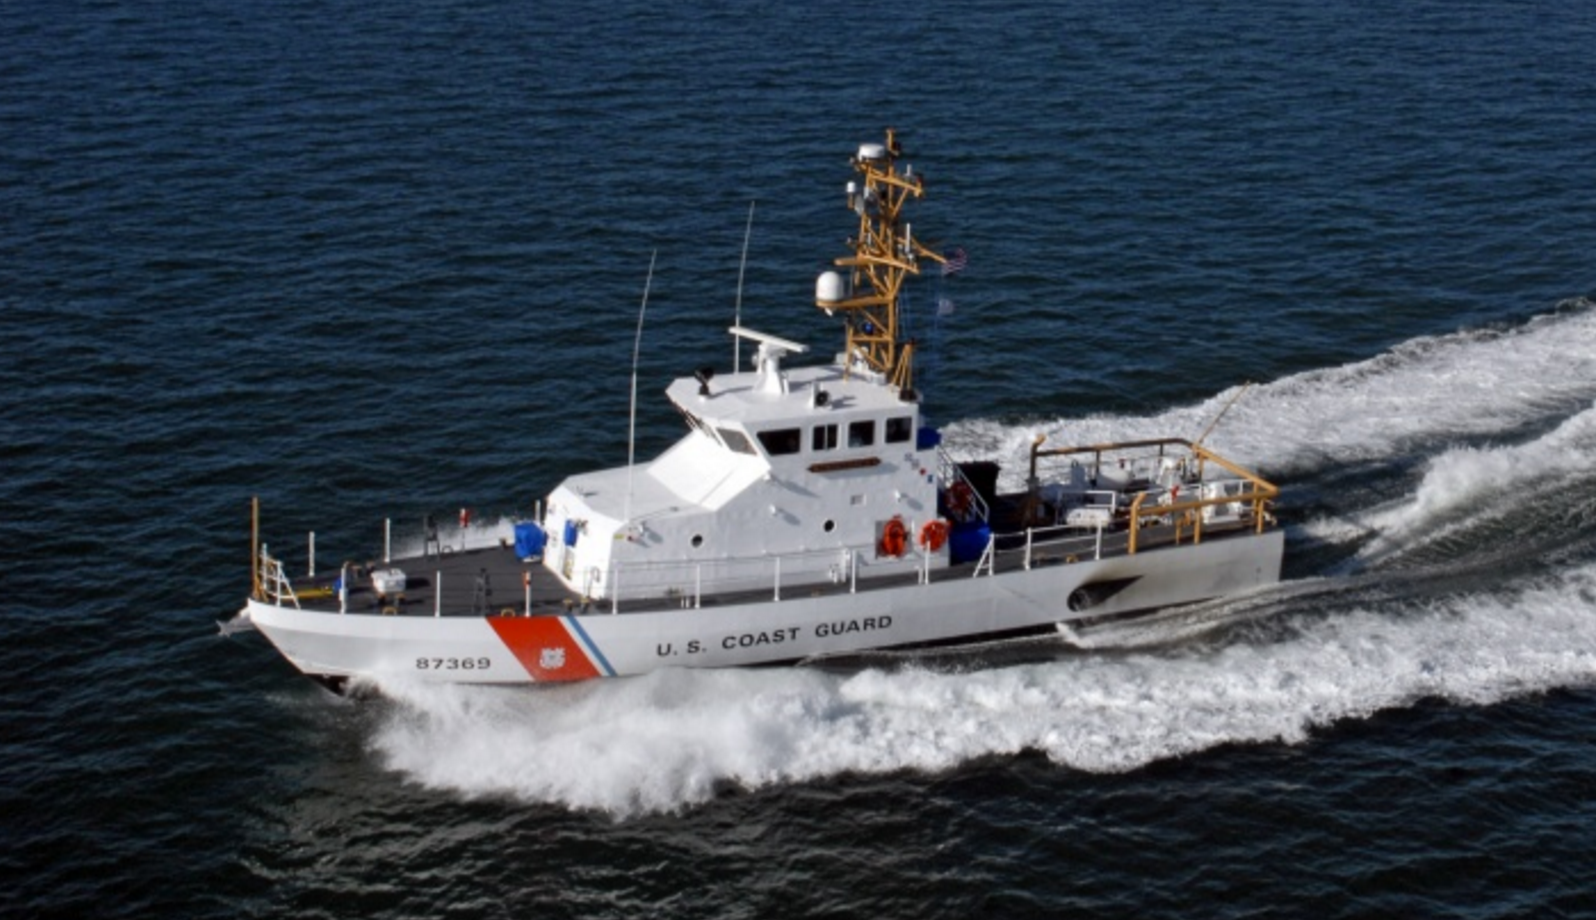 (Image: U.S. Coast Guard)